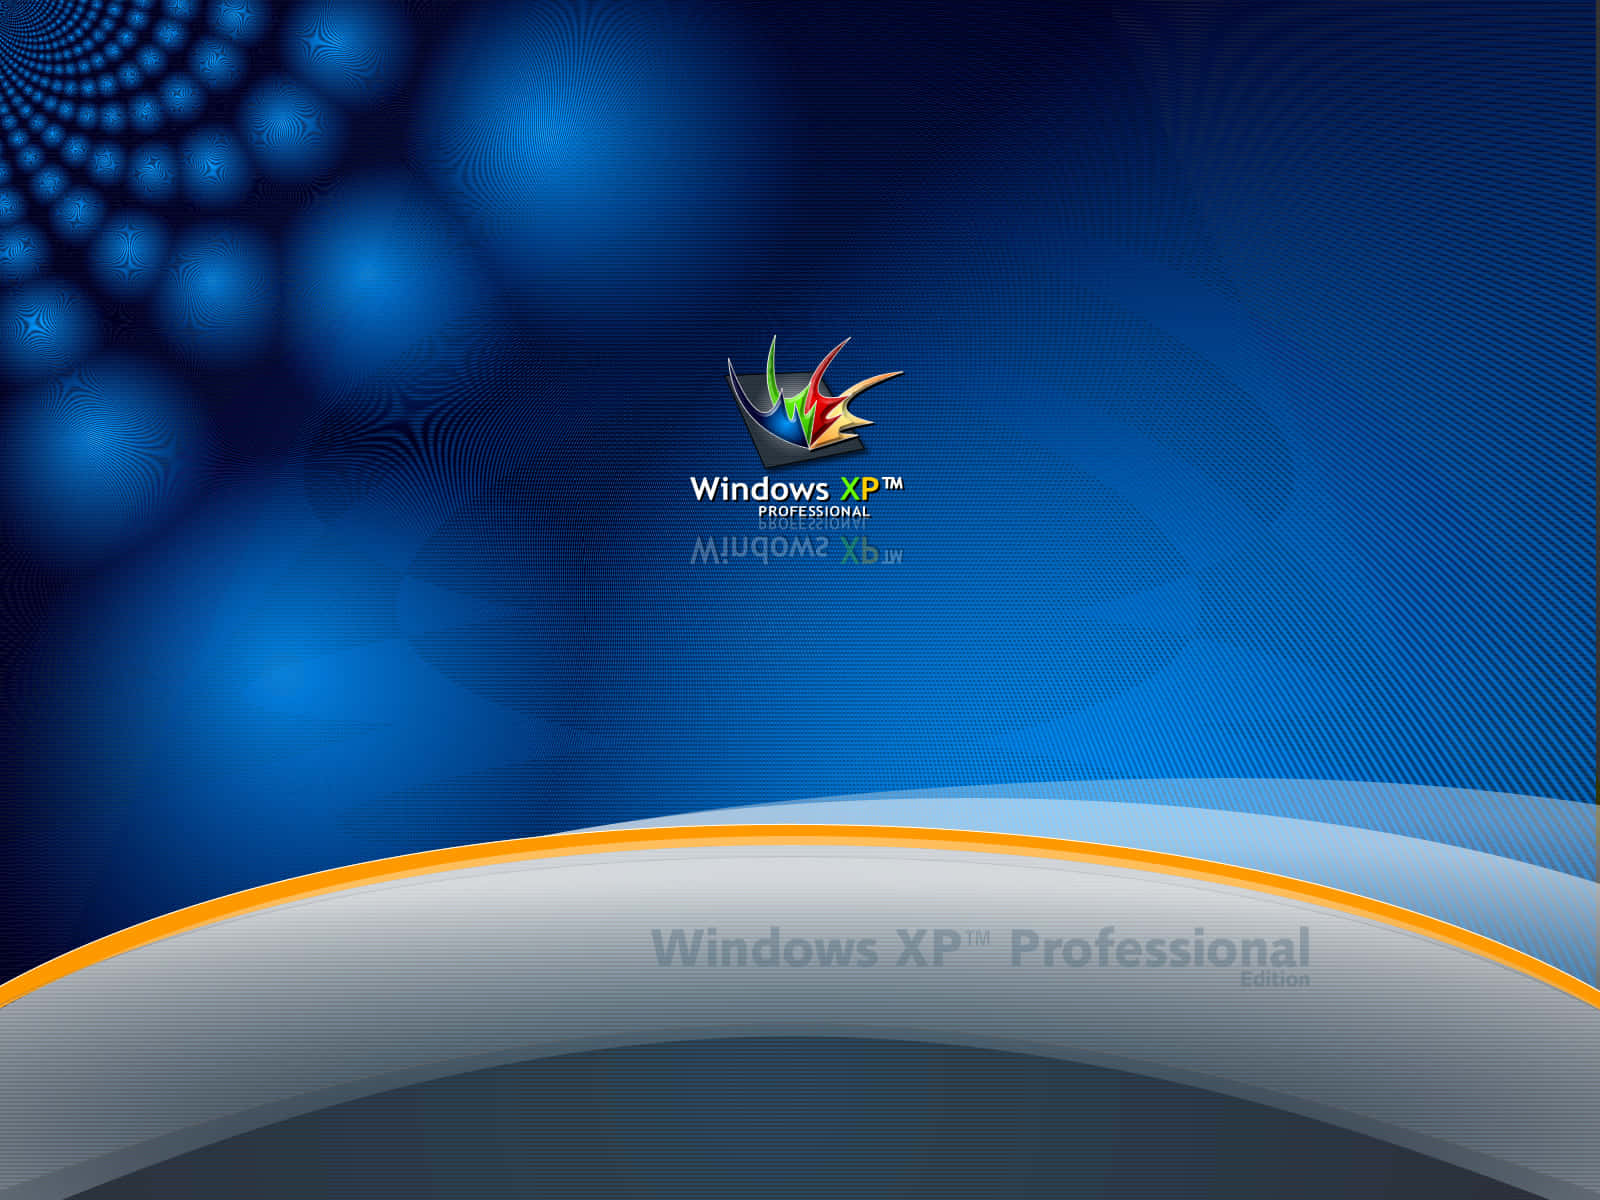 Windowsxp-logo. Wallpaper